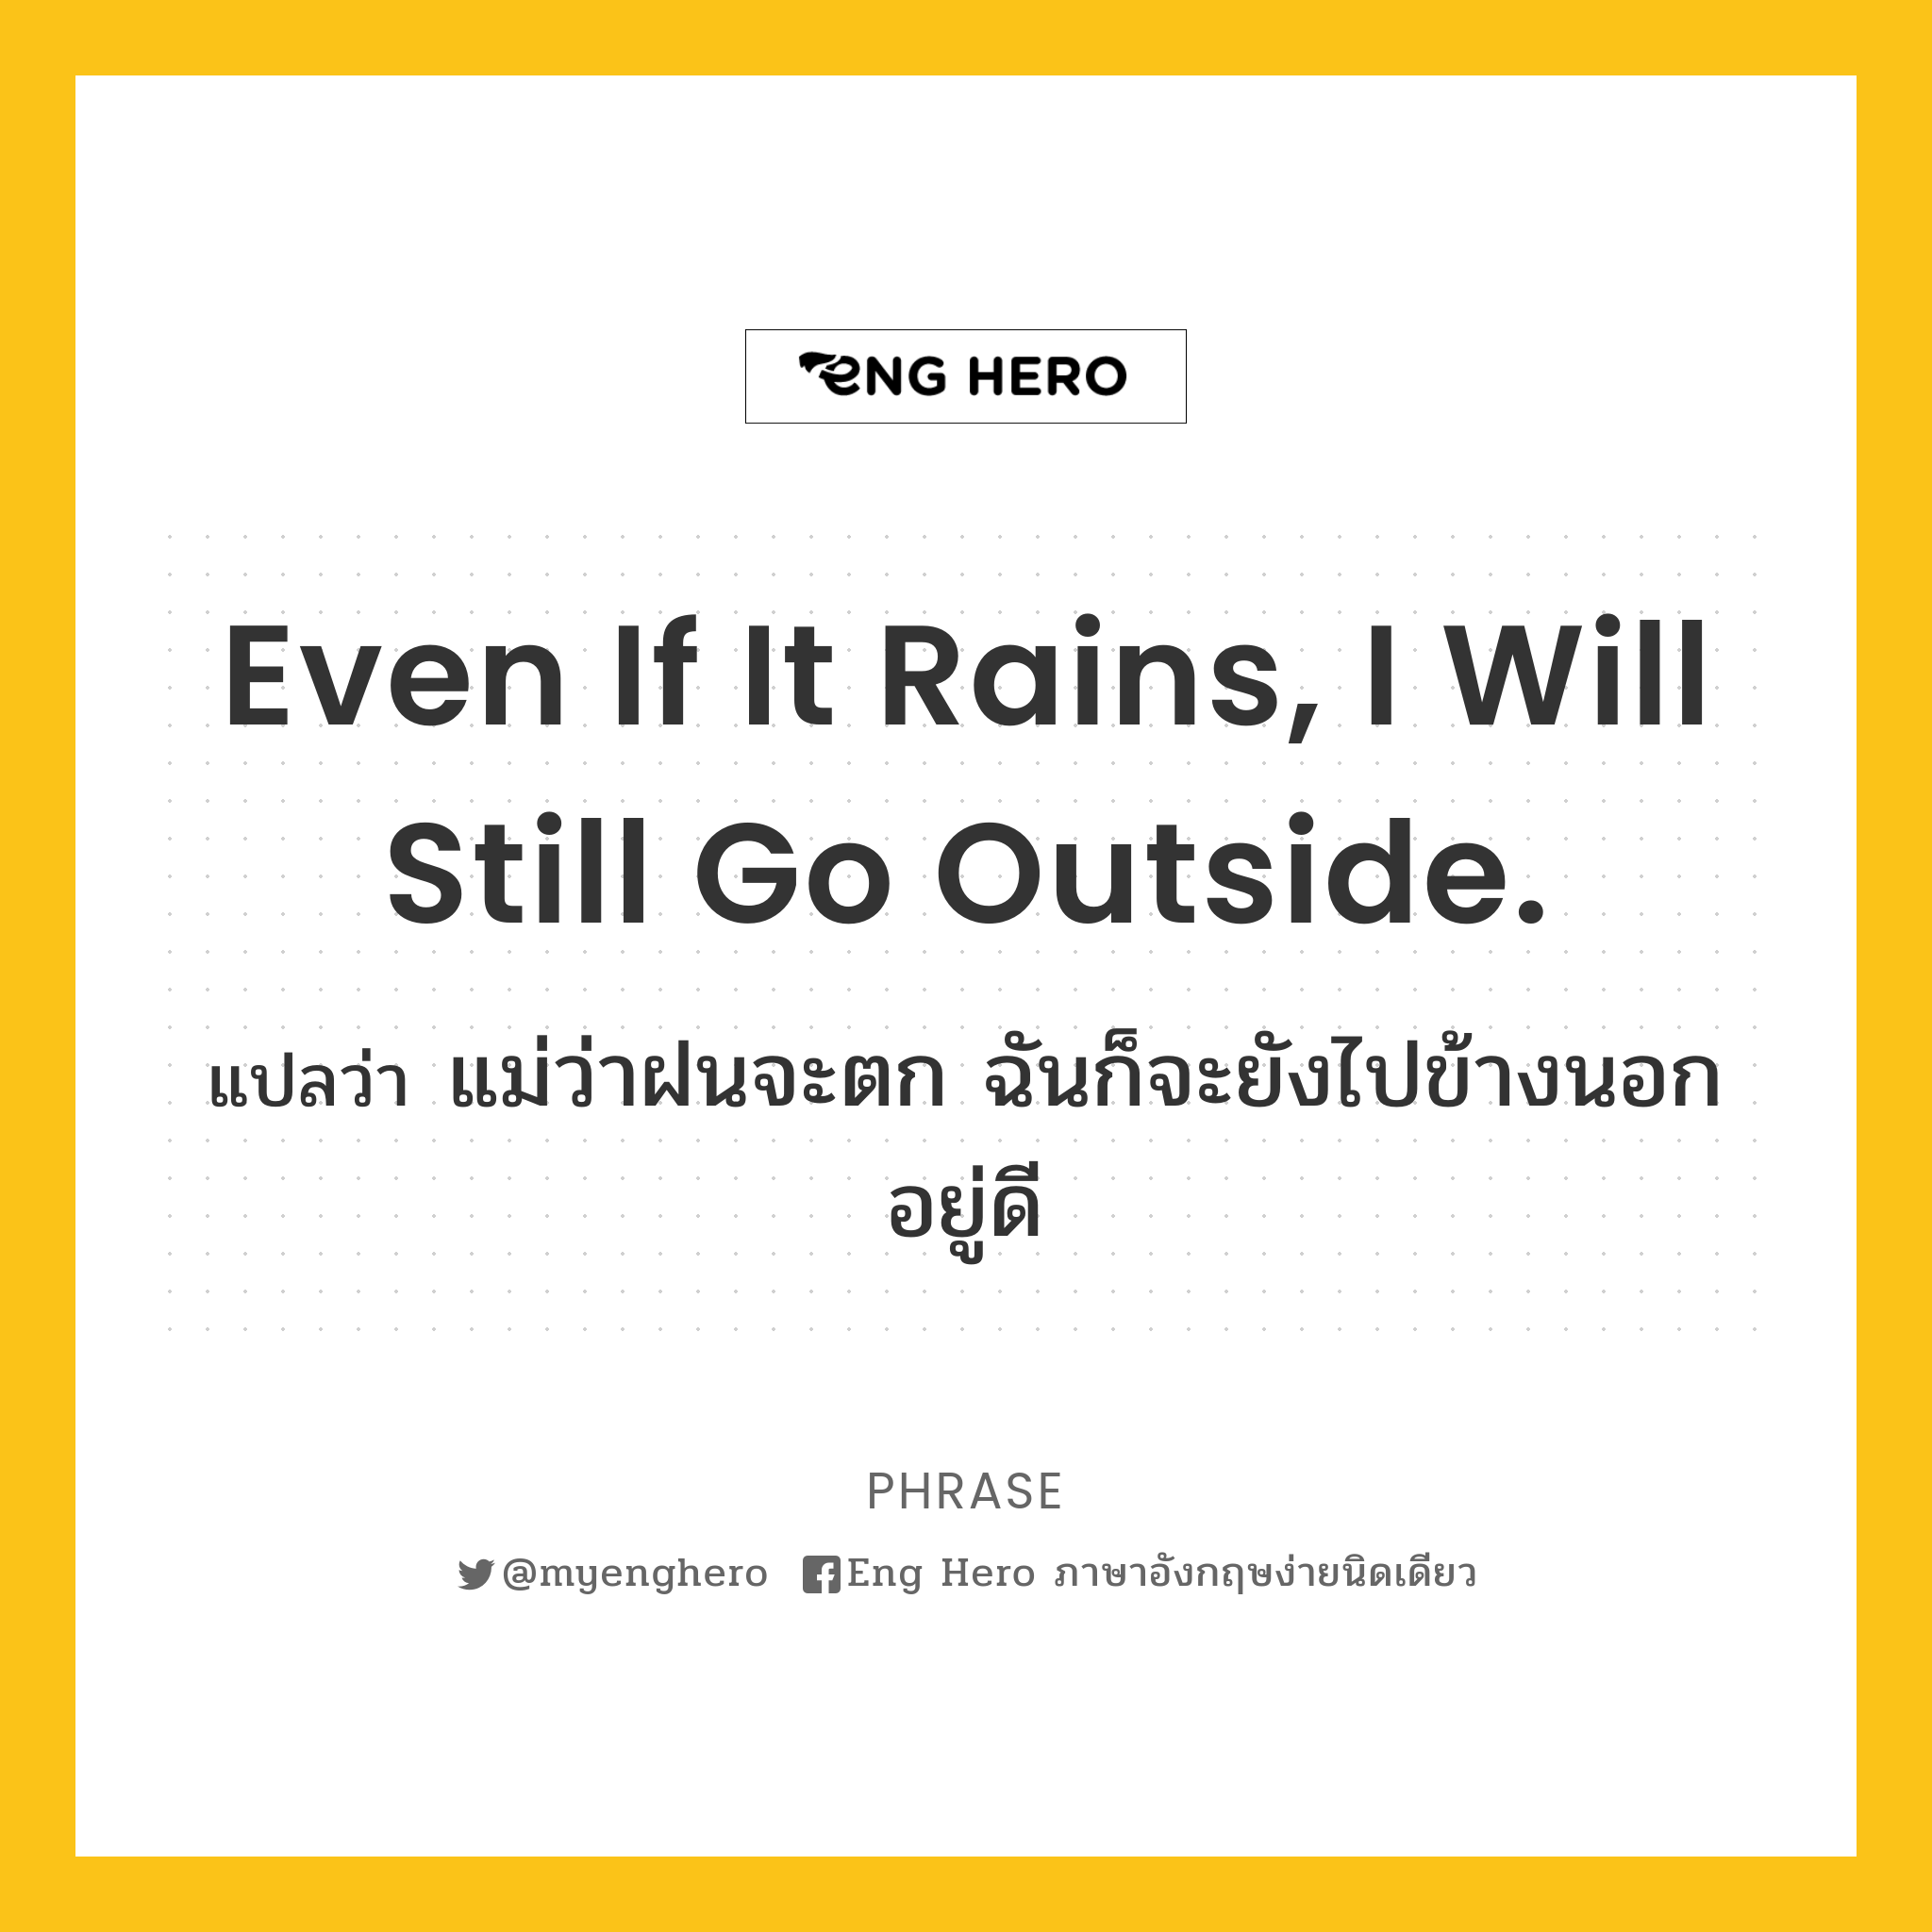 Even if it rains, I will still go outside.